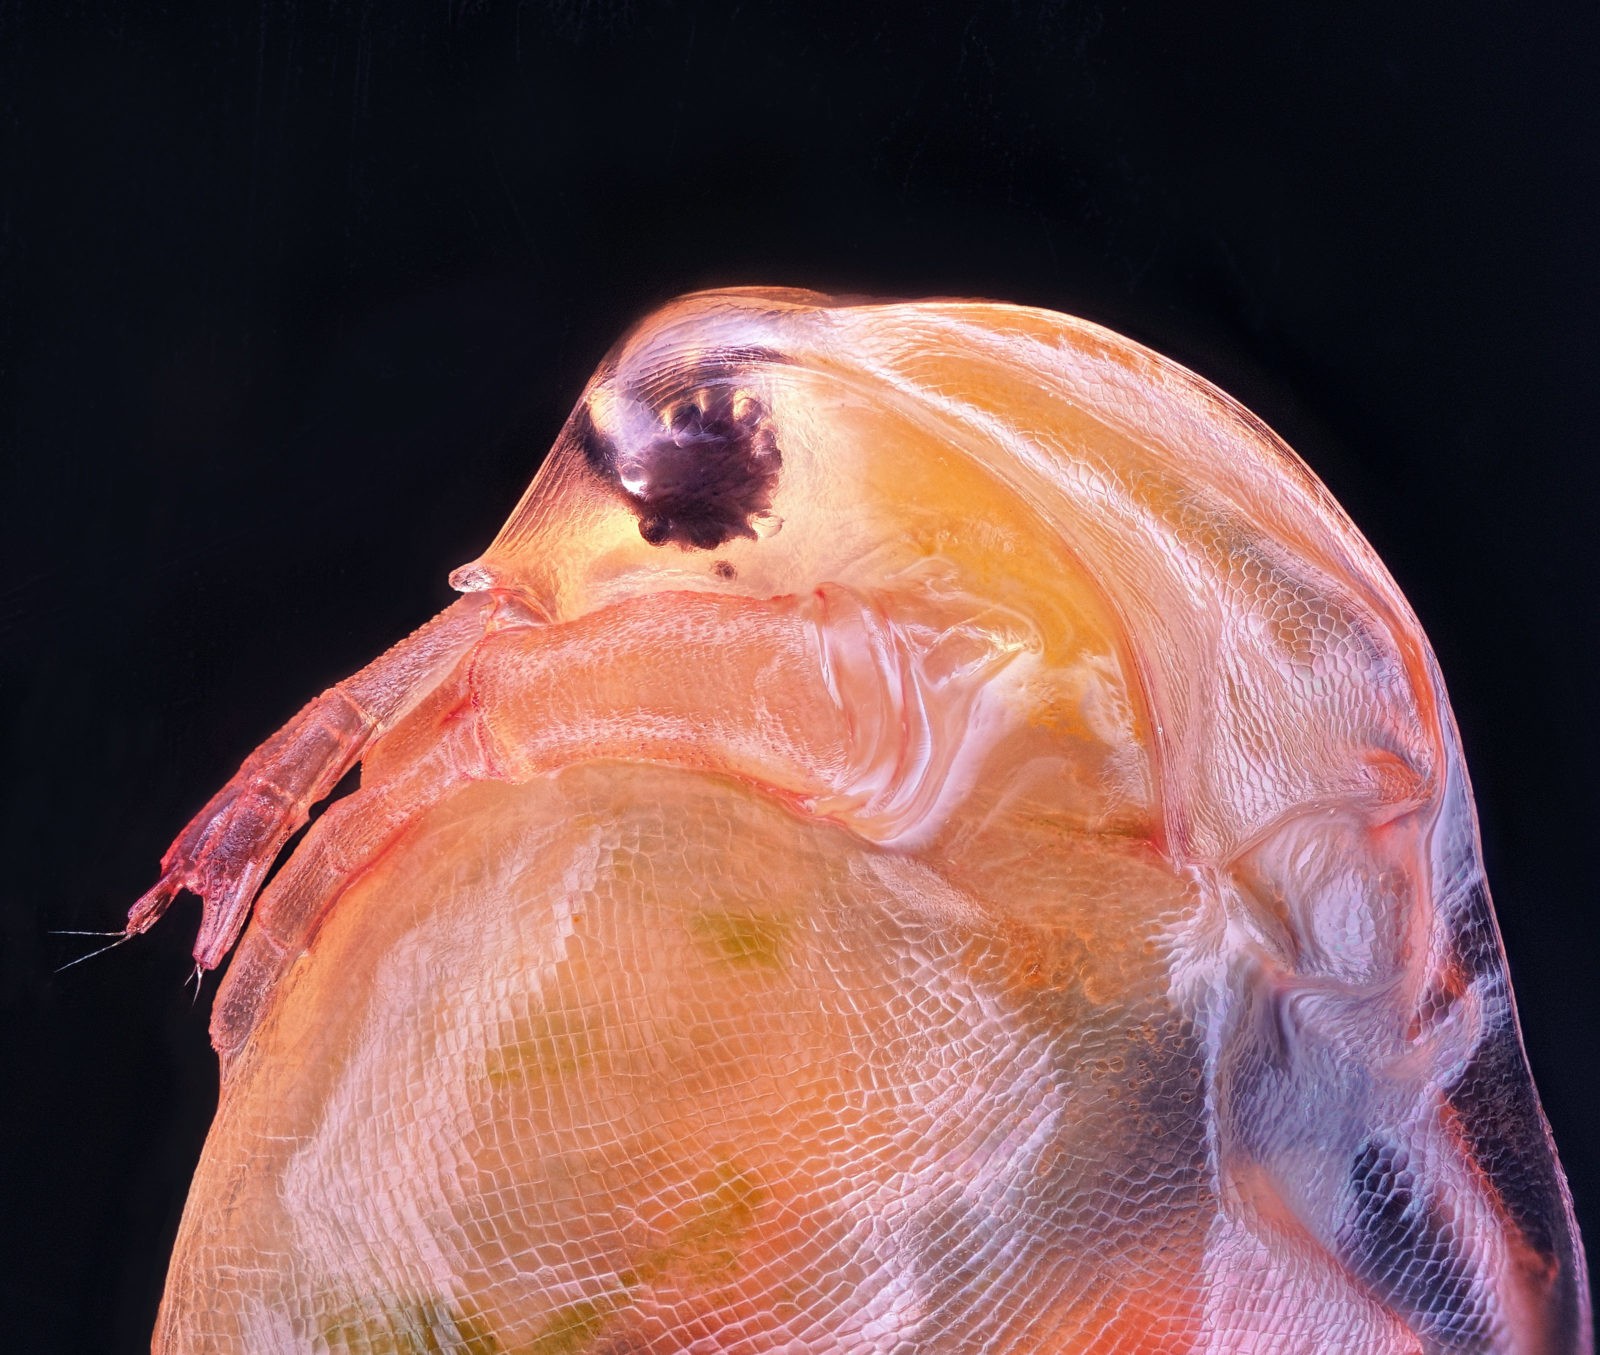 10 lugar: Daphnia magna crustáceo planctônico que vive em água doce (Foto: Ahmad Fauzan/2020 Photomicrography Competition)